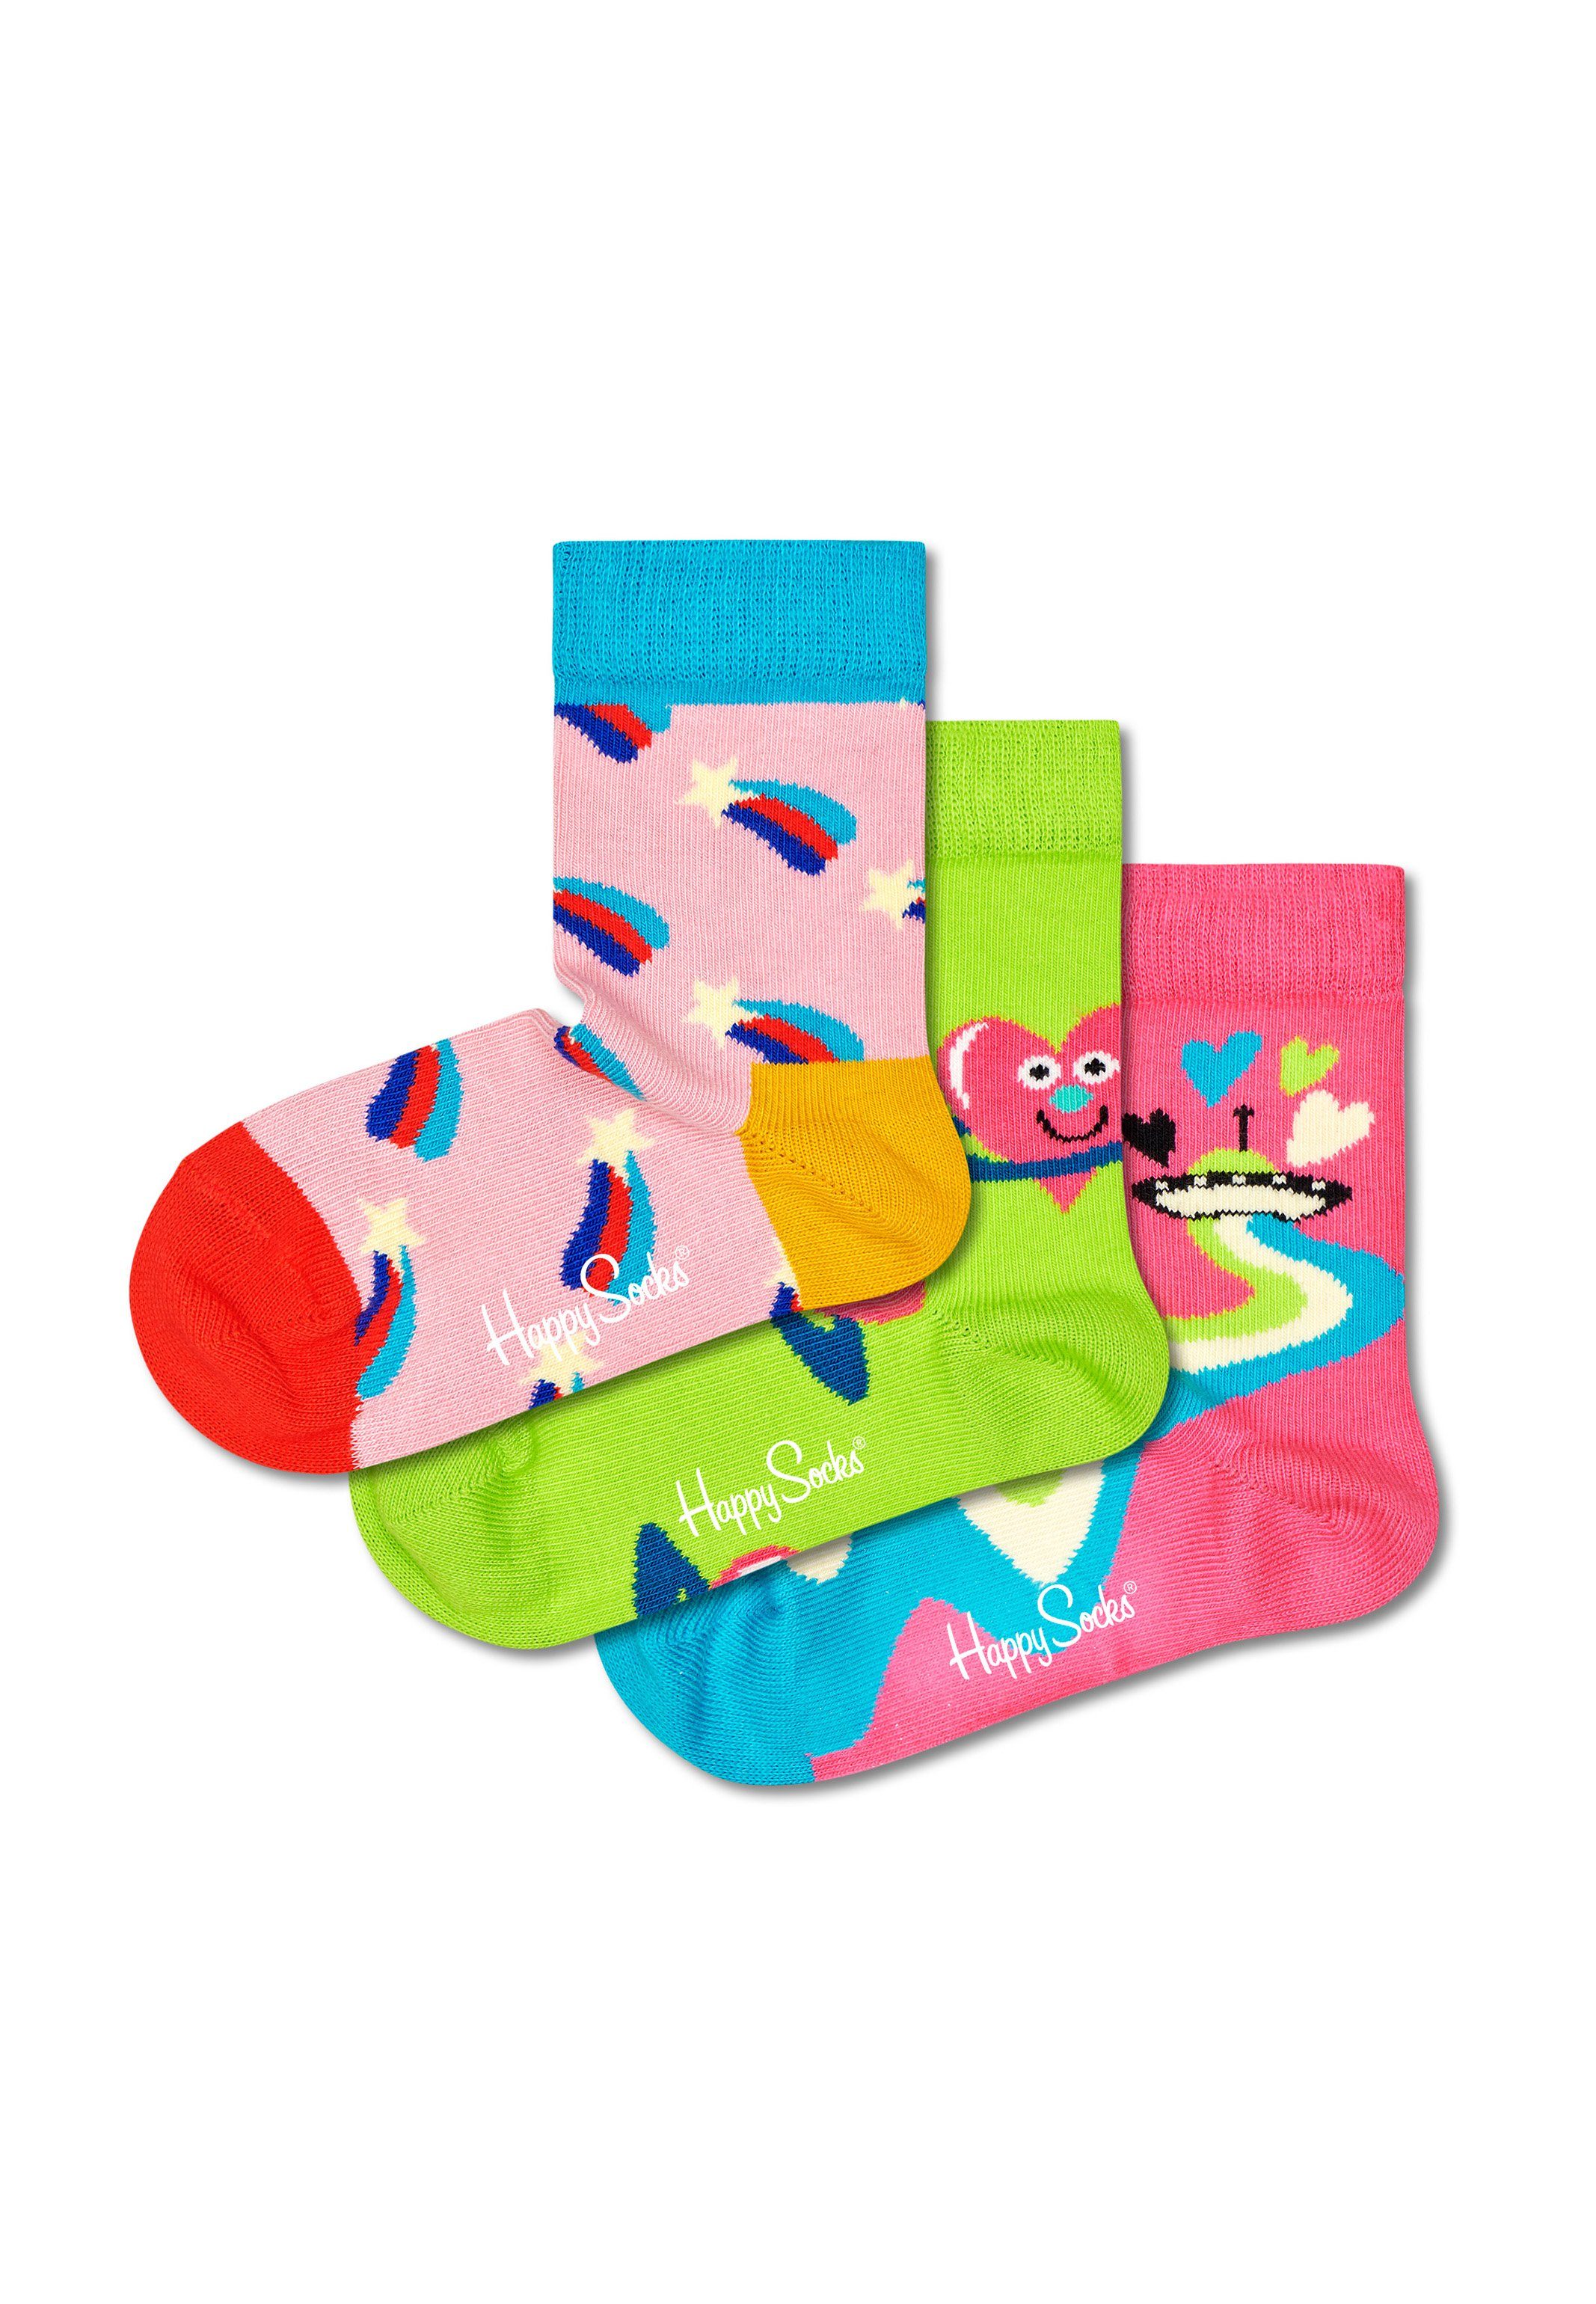 Happy Socks Langsocken Kids Hearts and Stars Geschenk Box (Spar-Set, 3-Paar) 3 Paar Socken - Baumwolle - 3 Paar bunte Socken in einer Geschenkbox